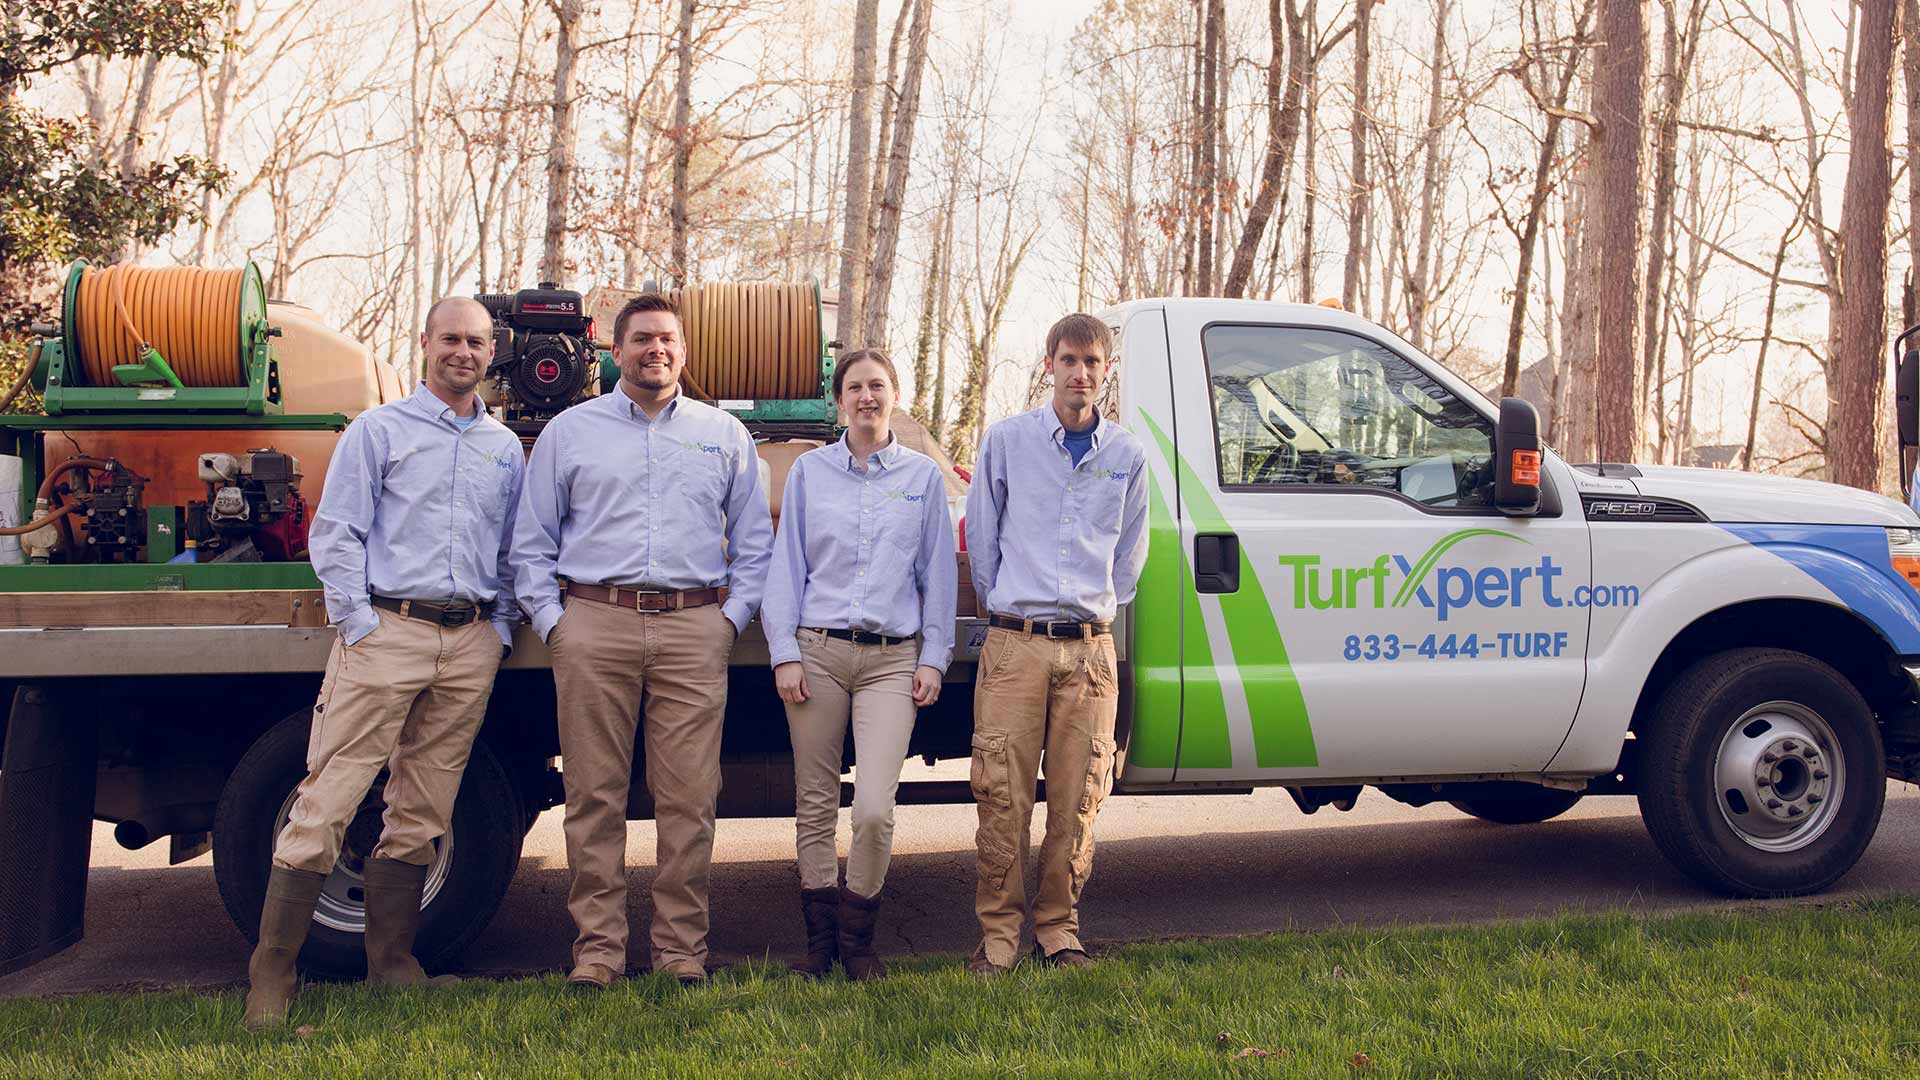 TurfXpert staff and work truck servicing a Woodstock, GA lawn.